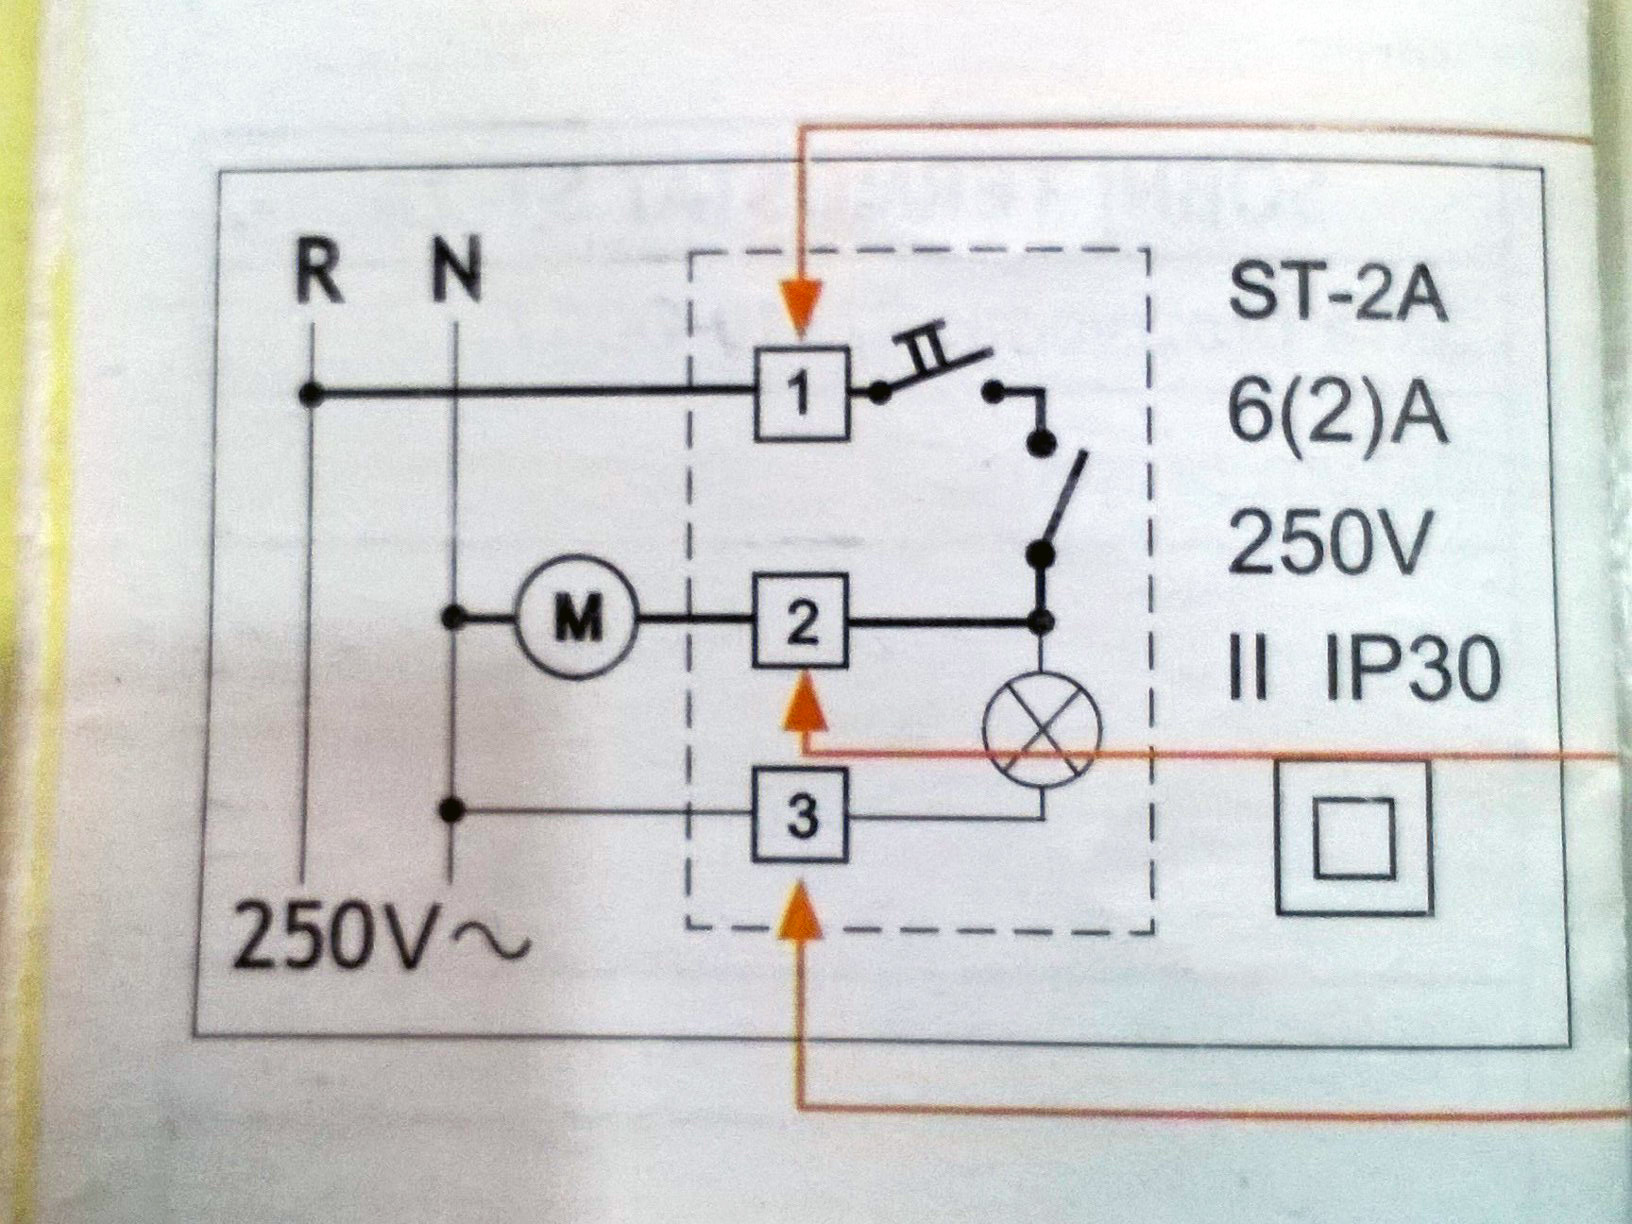 salus wiring diagram